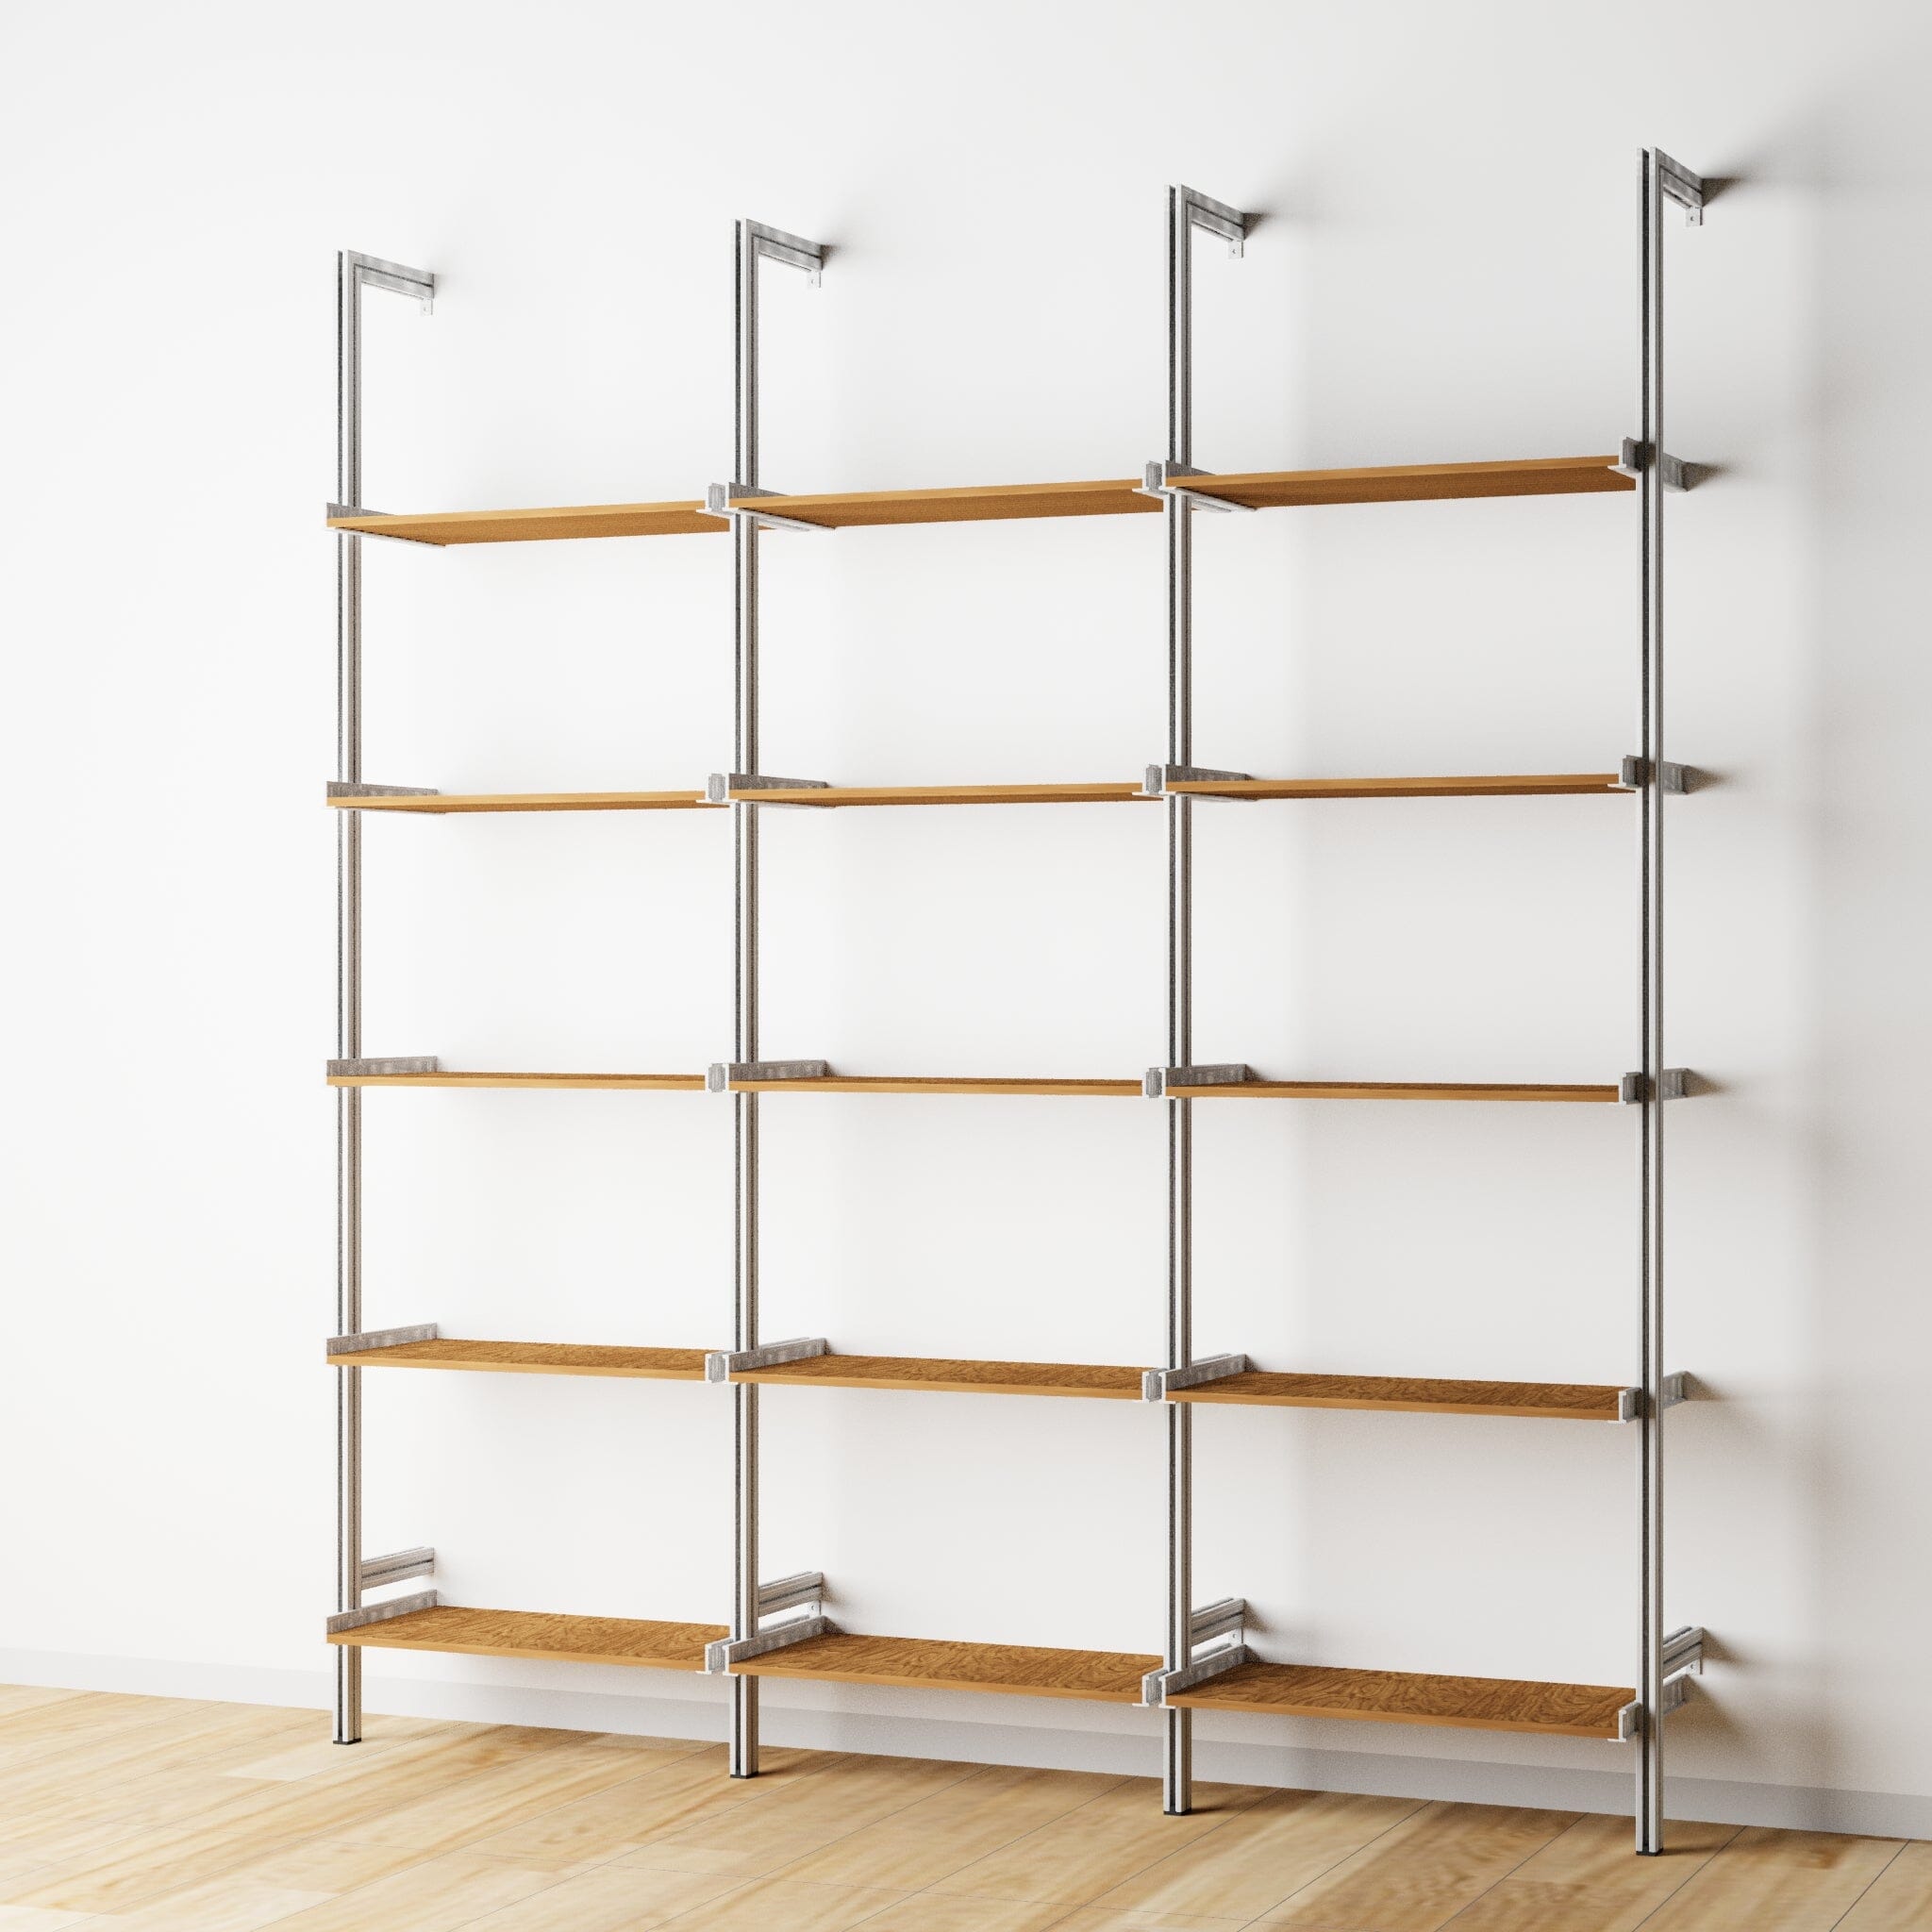 Modular Shelving Units - Wood Shelves – Modern Shelving